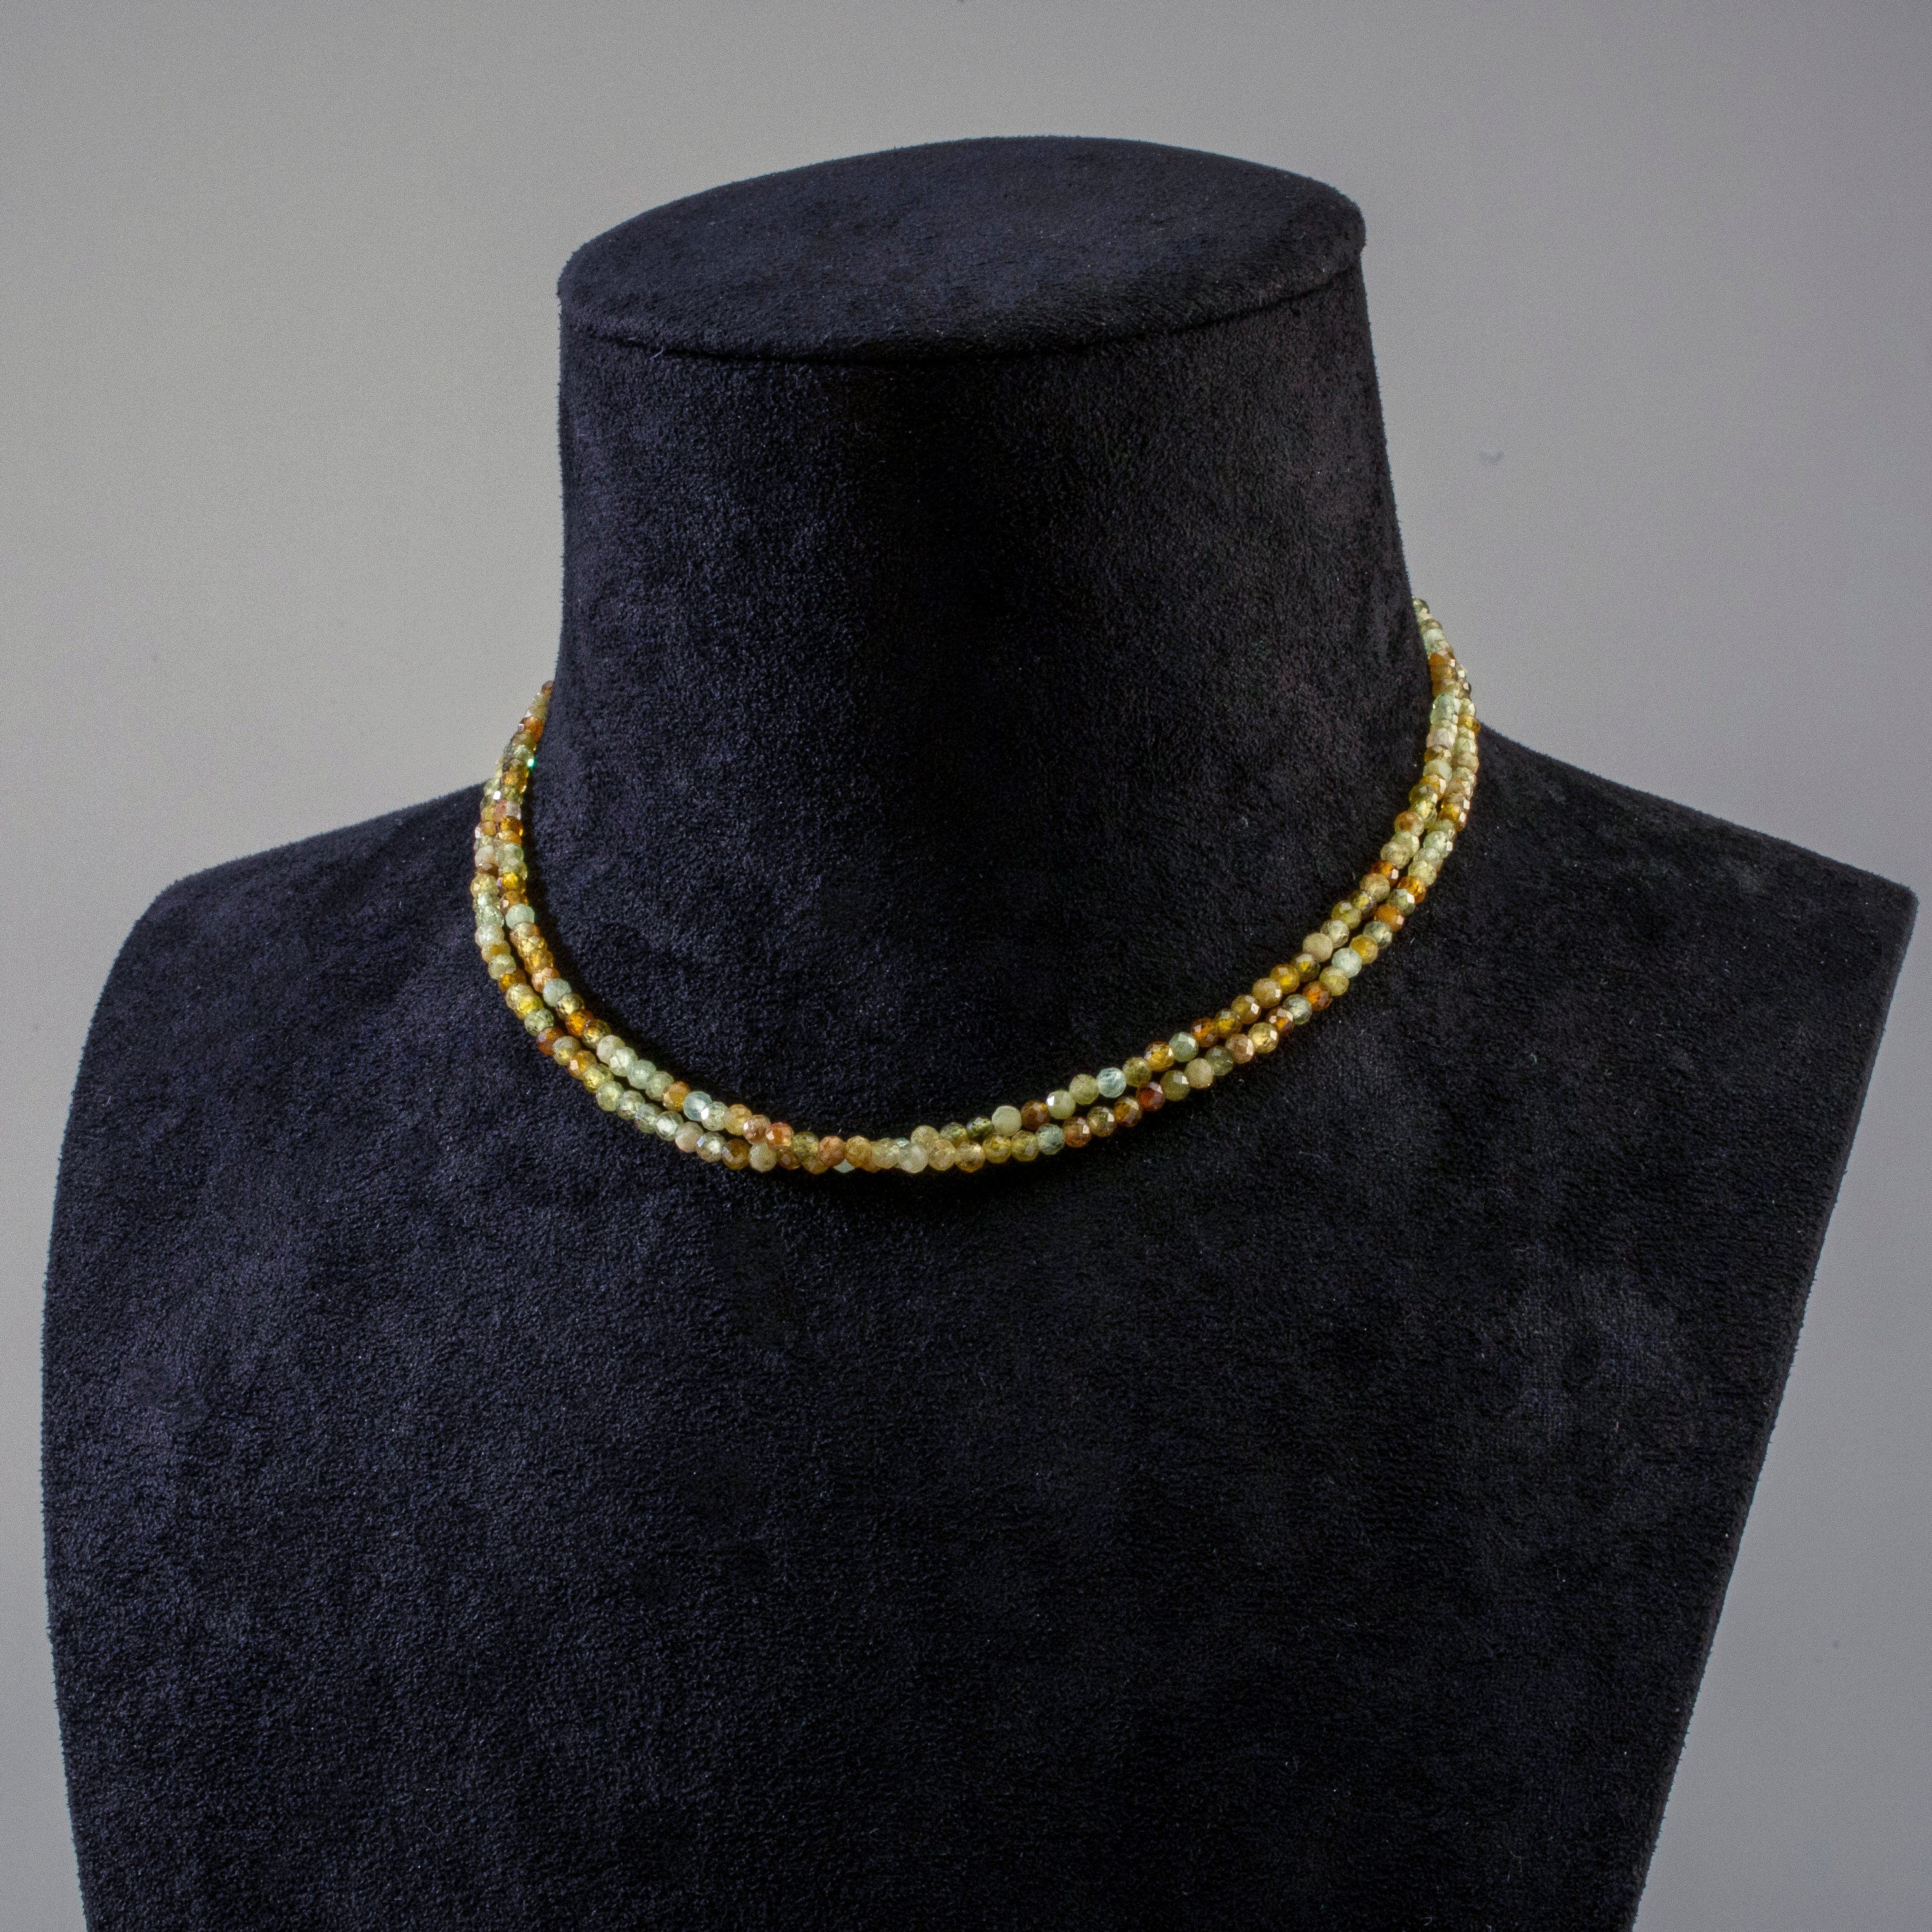 KALIFANO Gemstone Jewelry 3mm Green Garnet Faceted 31" Necklace / Multi Wrap Bracelet N3-79S-GG